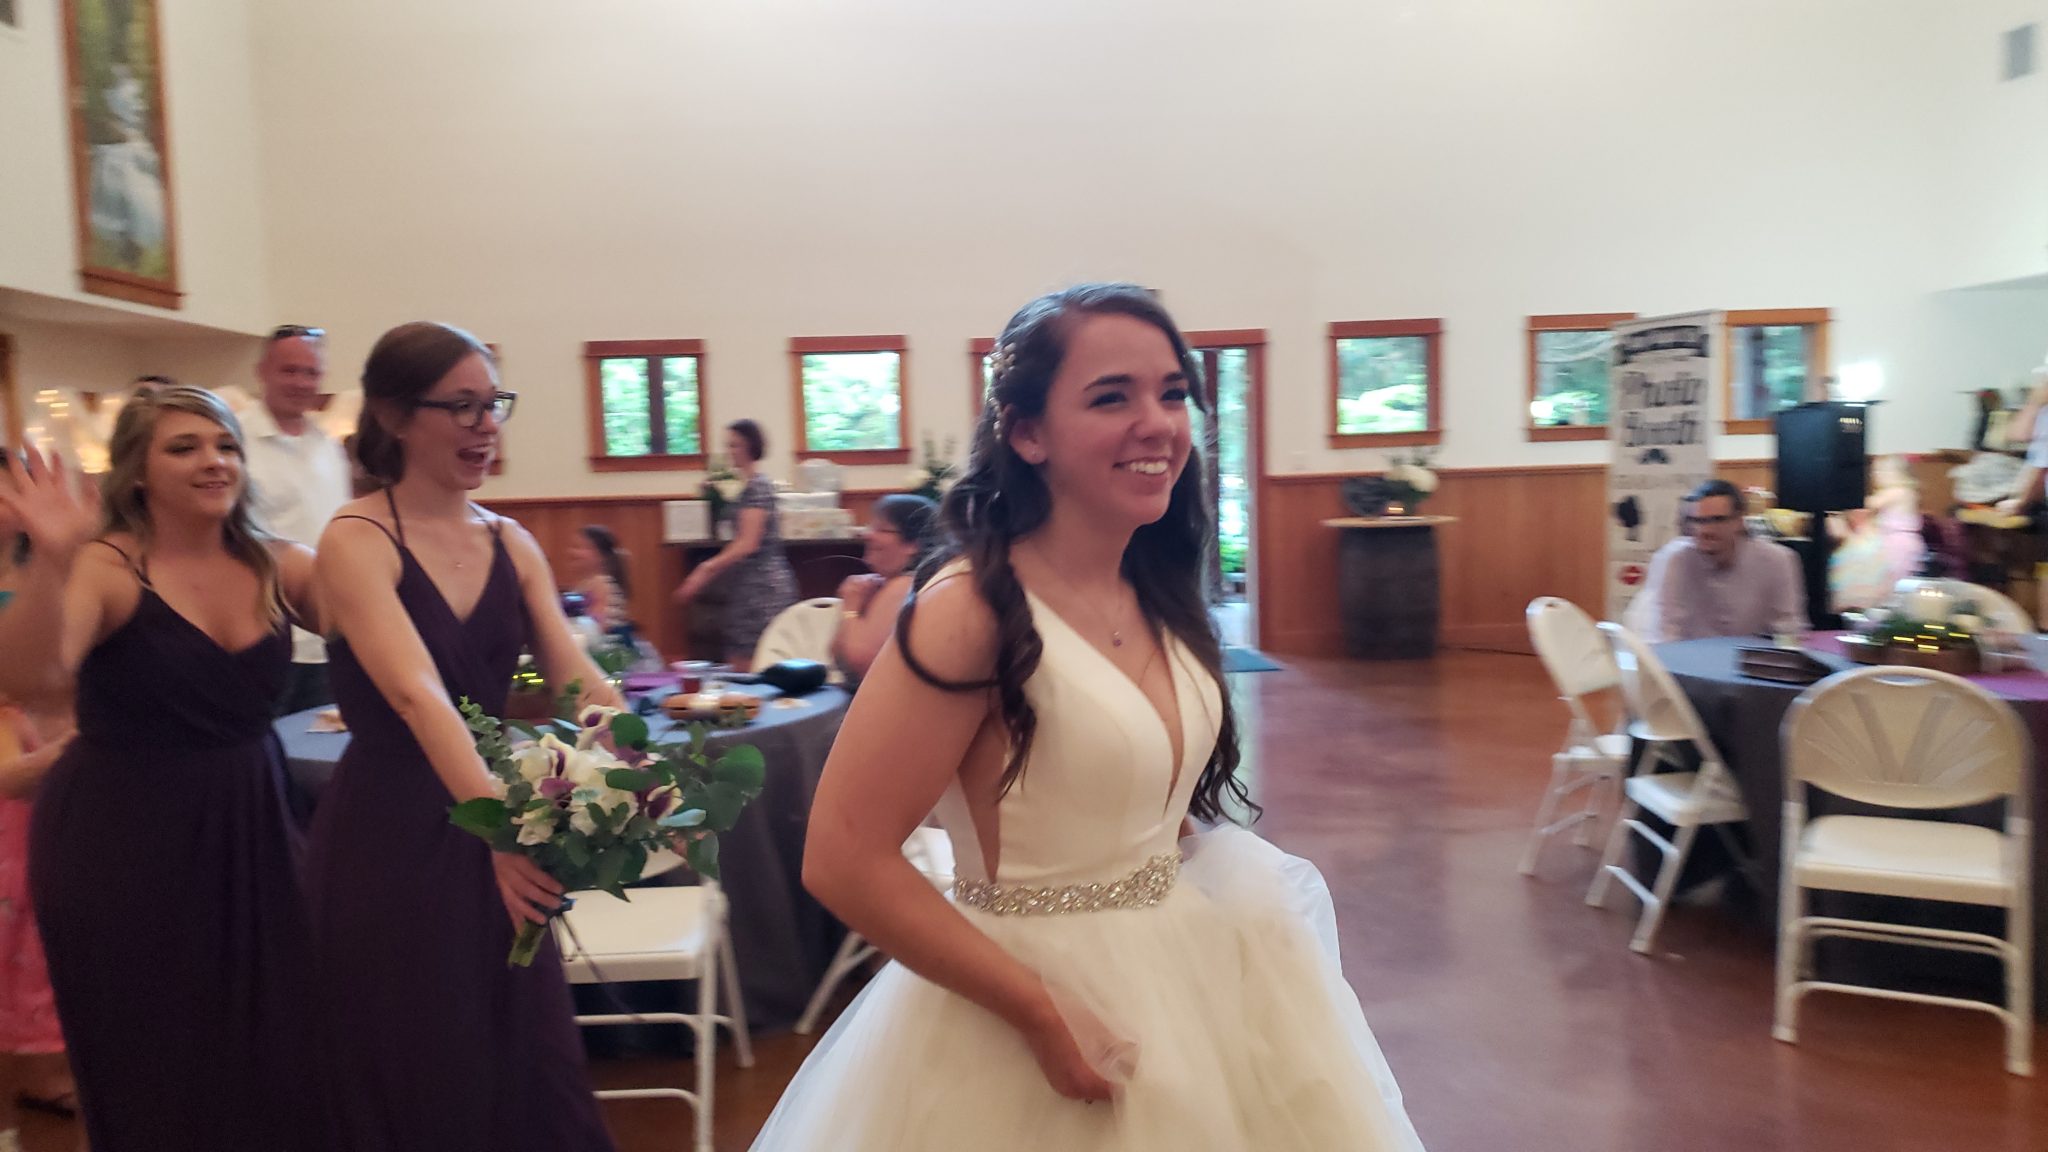 Another Happy Bride